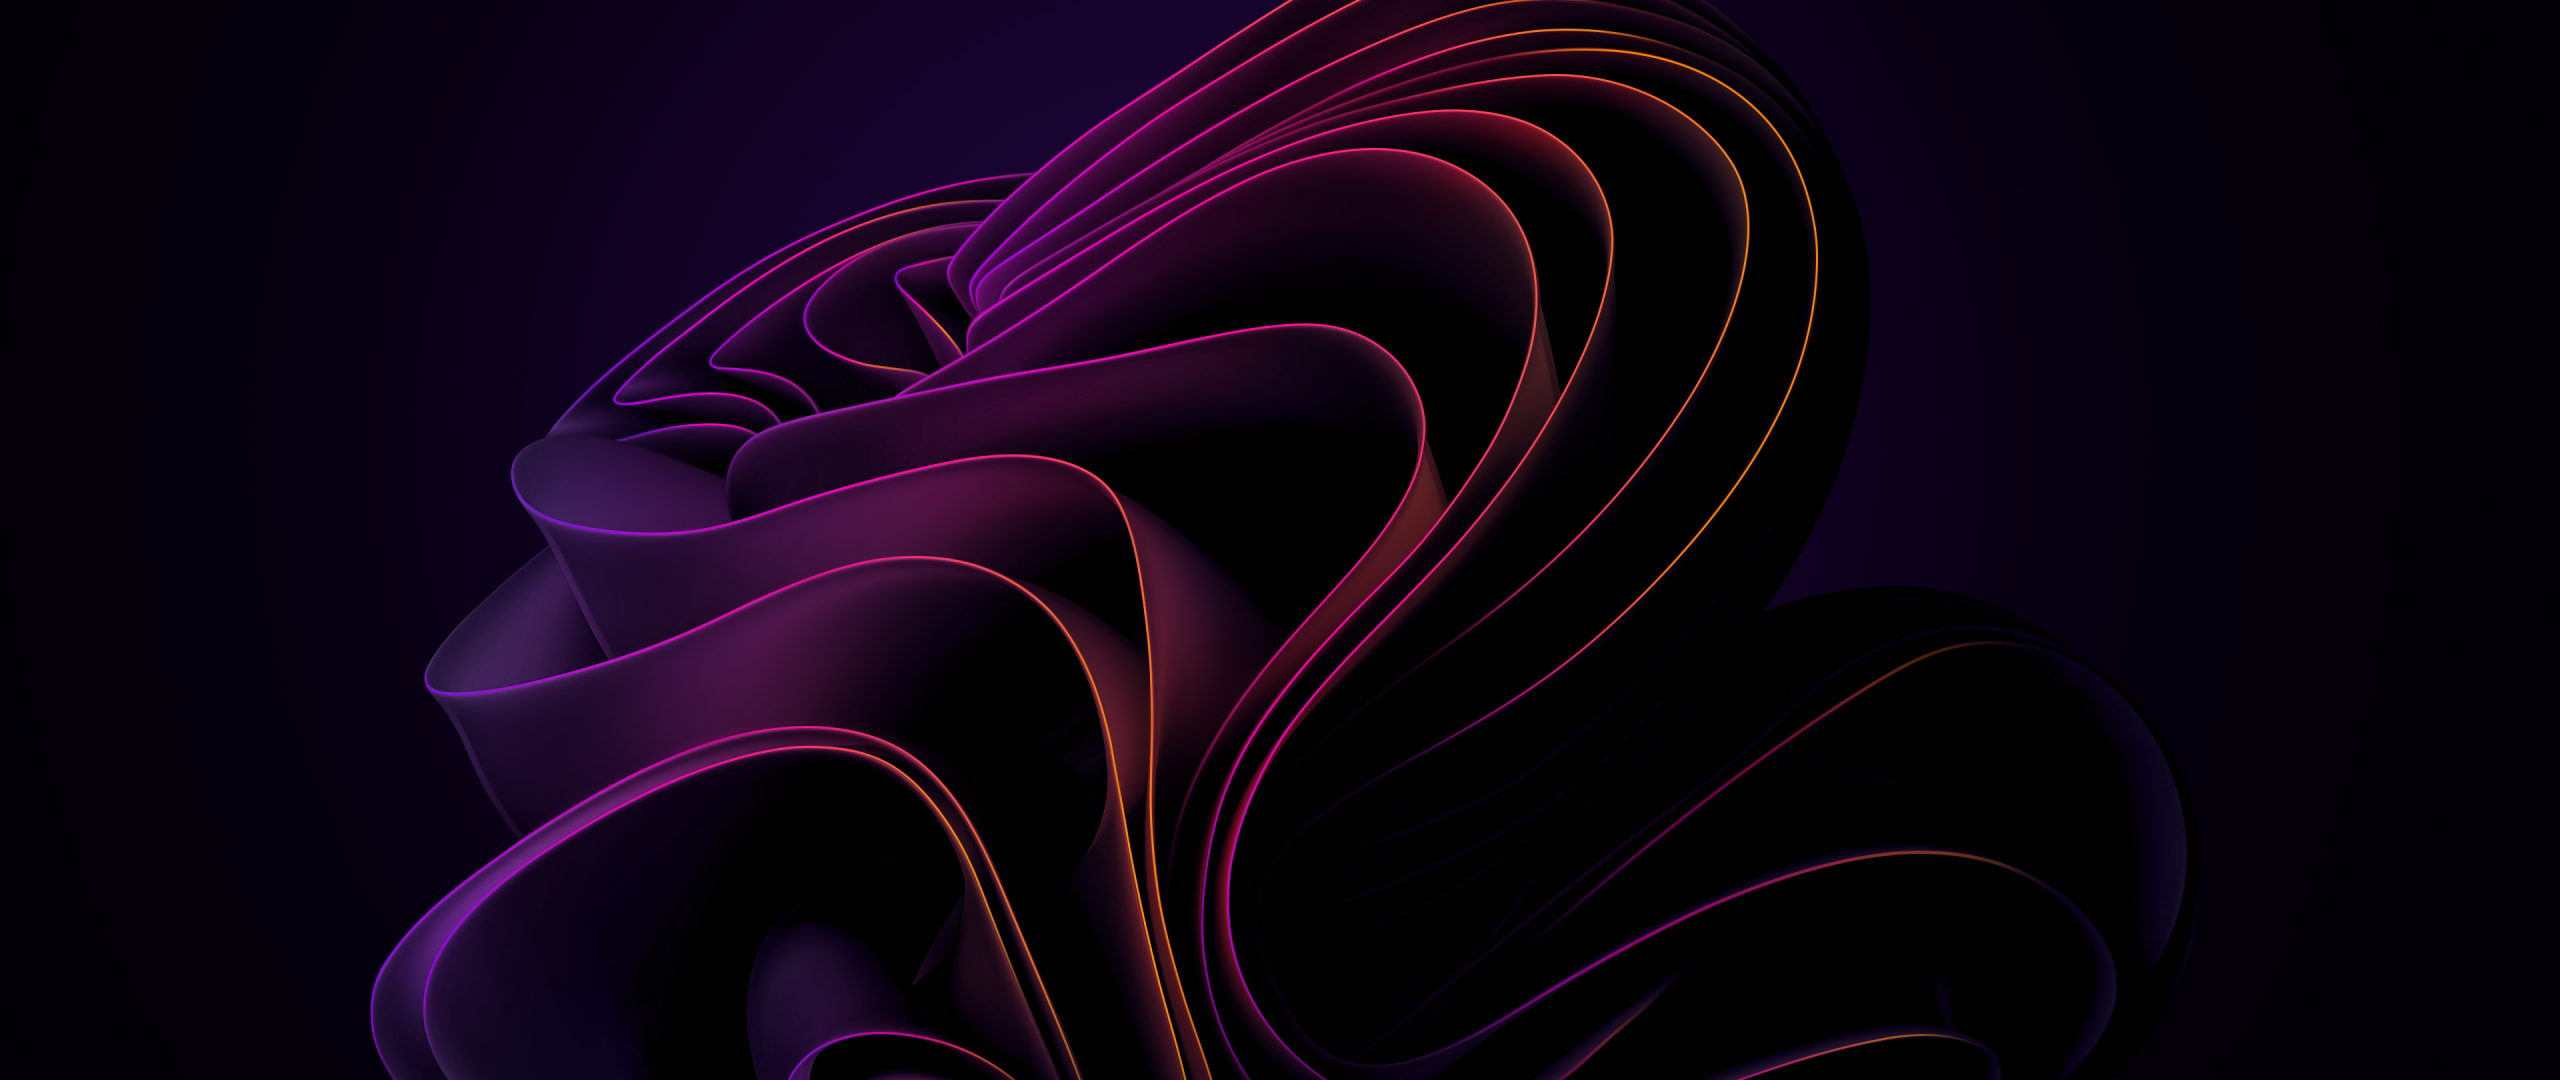 Windows 11 Wallpaper 4K, Purple abstract, Dark background